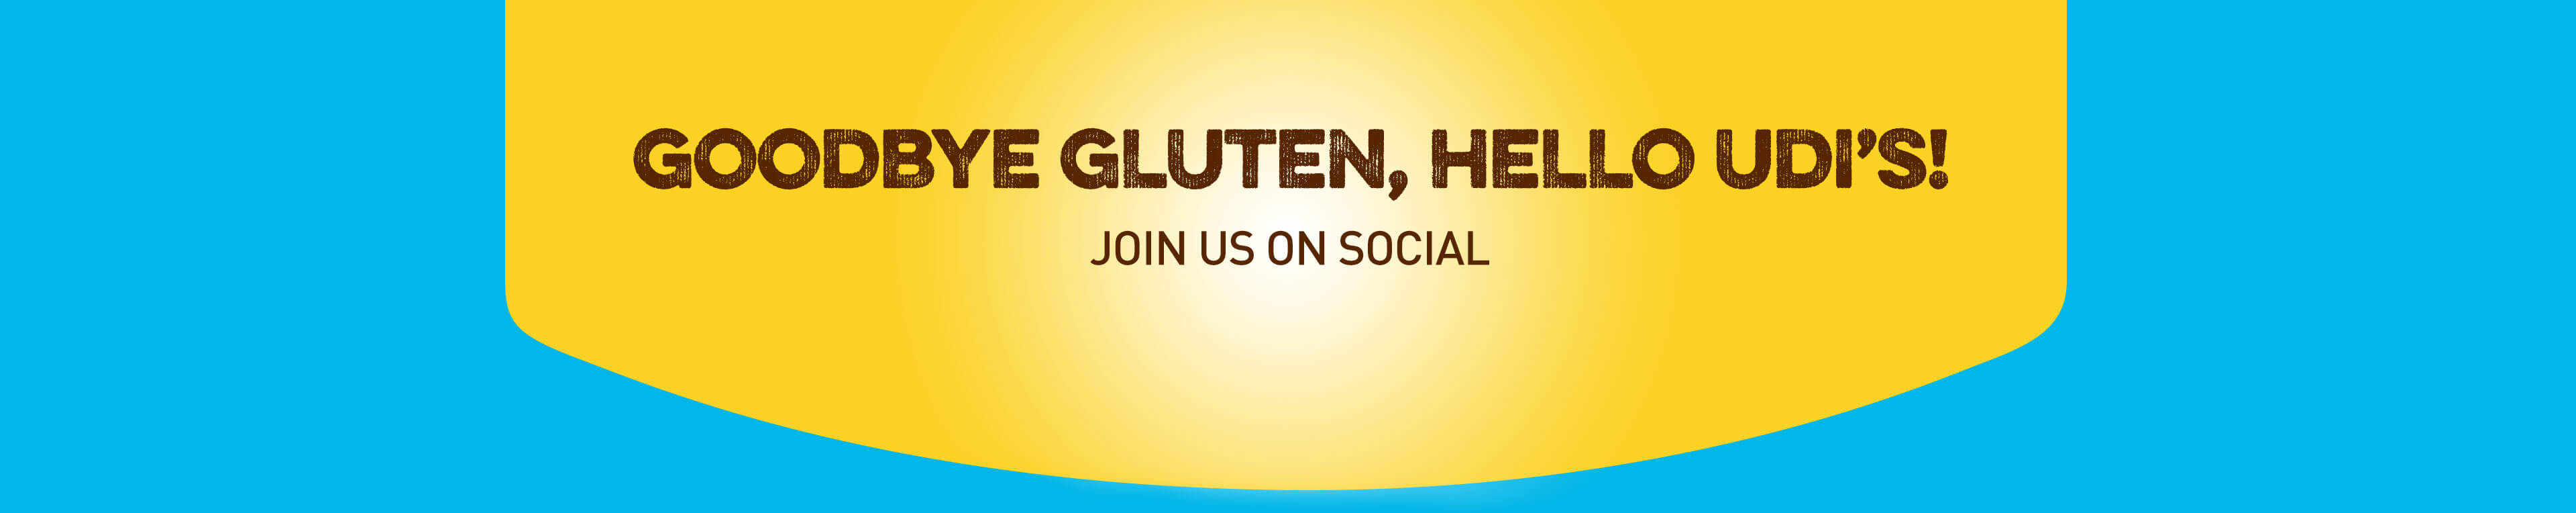 Goodbye gluten, hello Udi’s! JOIN US ON SOCIAL